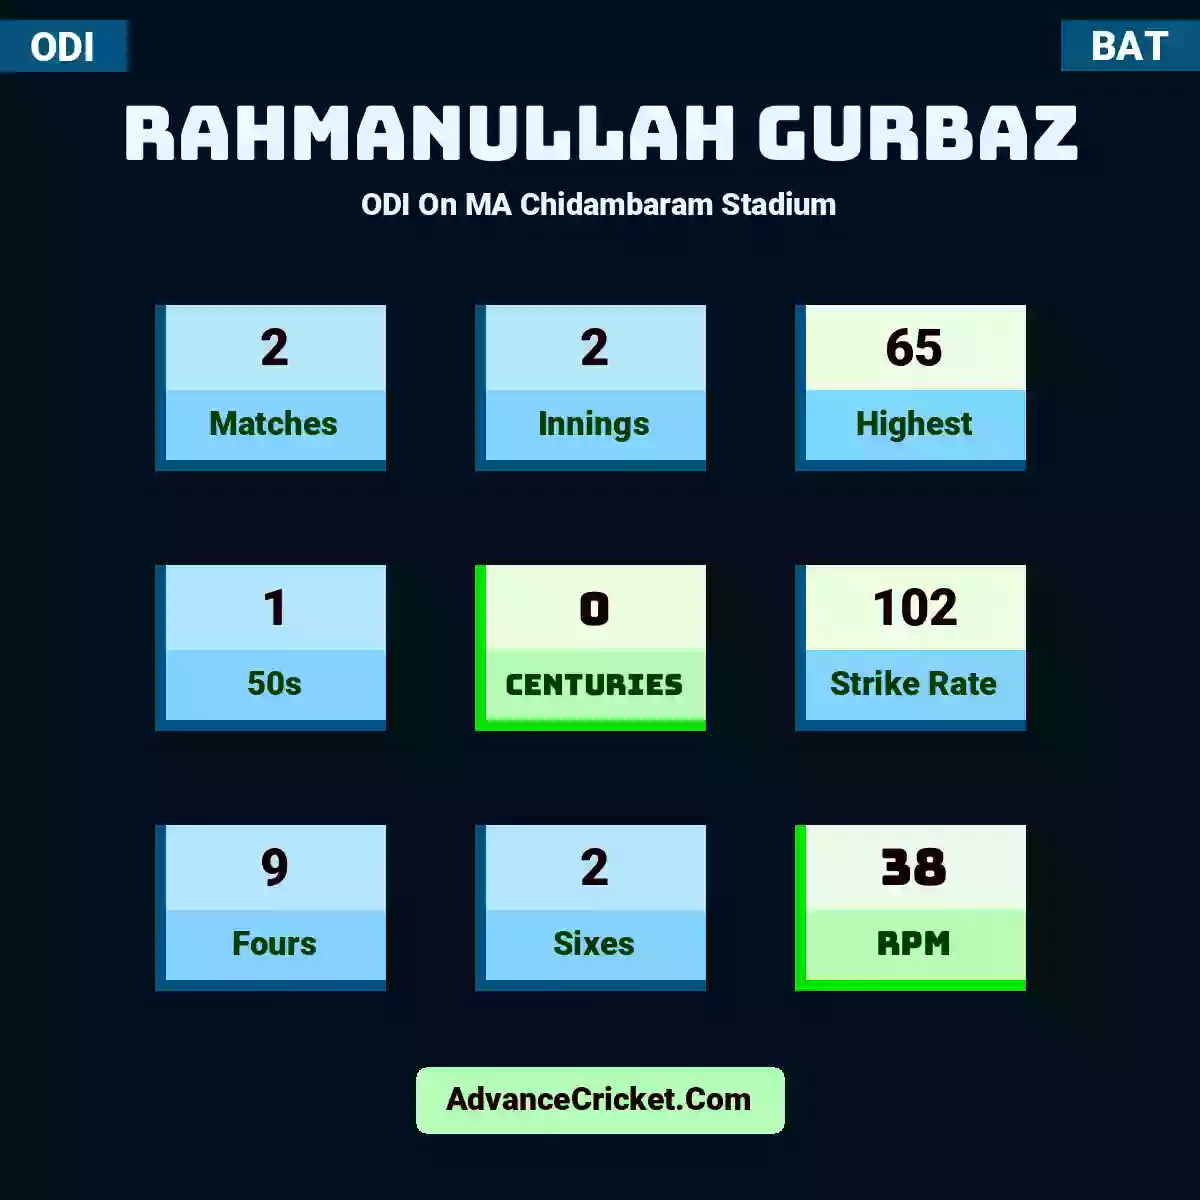 Rahmanullah Gurbaz ODI  On MA Chidambaram Stadium, Rahmanullah Gurbaz played 2 matches, scored 65 runs as highest, 1 half-centuries, and 0 centuries, with a strike rate of 102. R.Gurbaz hit 9 fours and 2 sixes, with an RPM of 38.